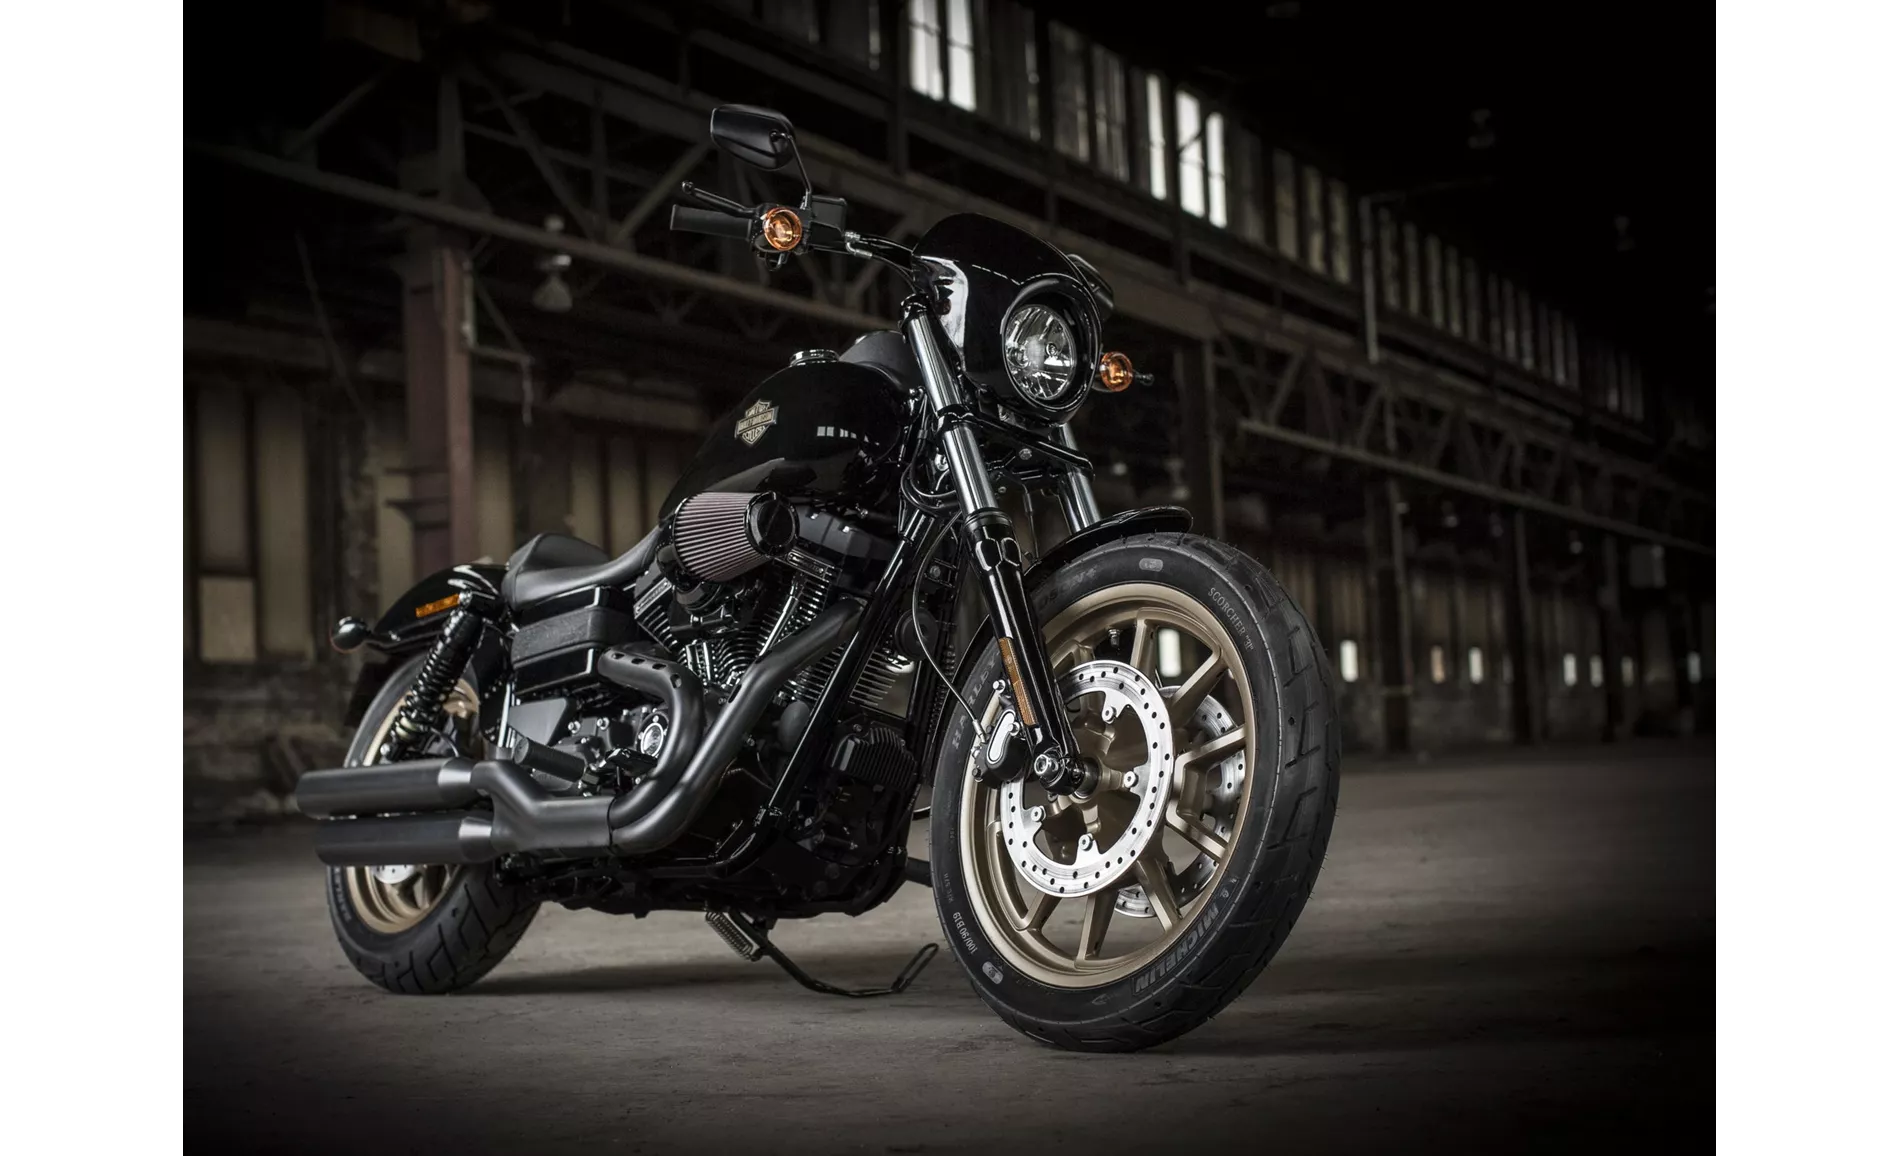 Harley-Davidson Dyna Low Rider S FXDLS 2016